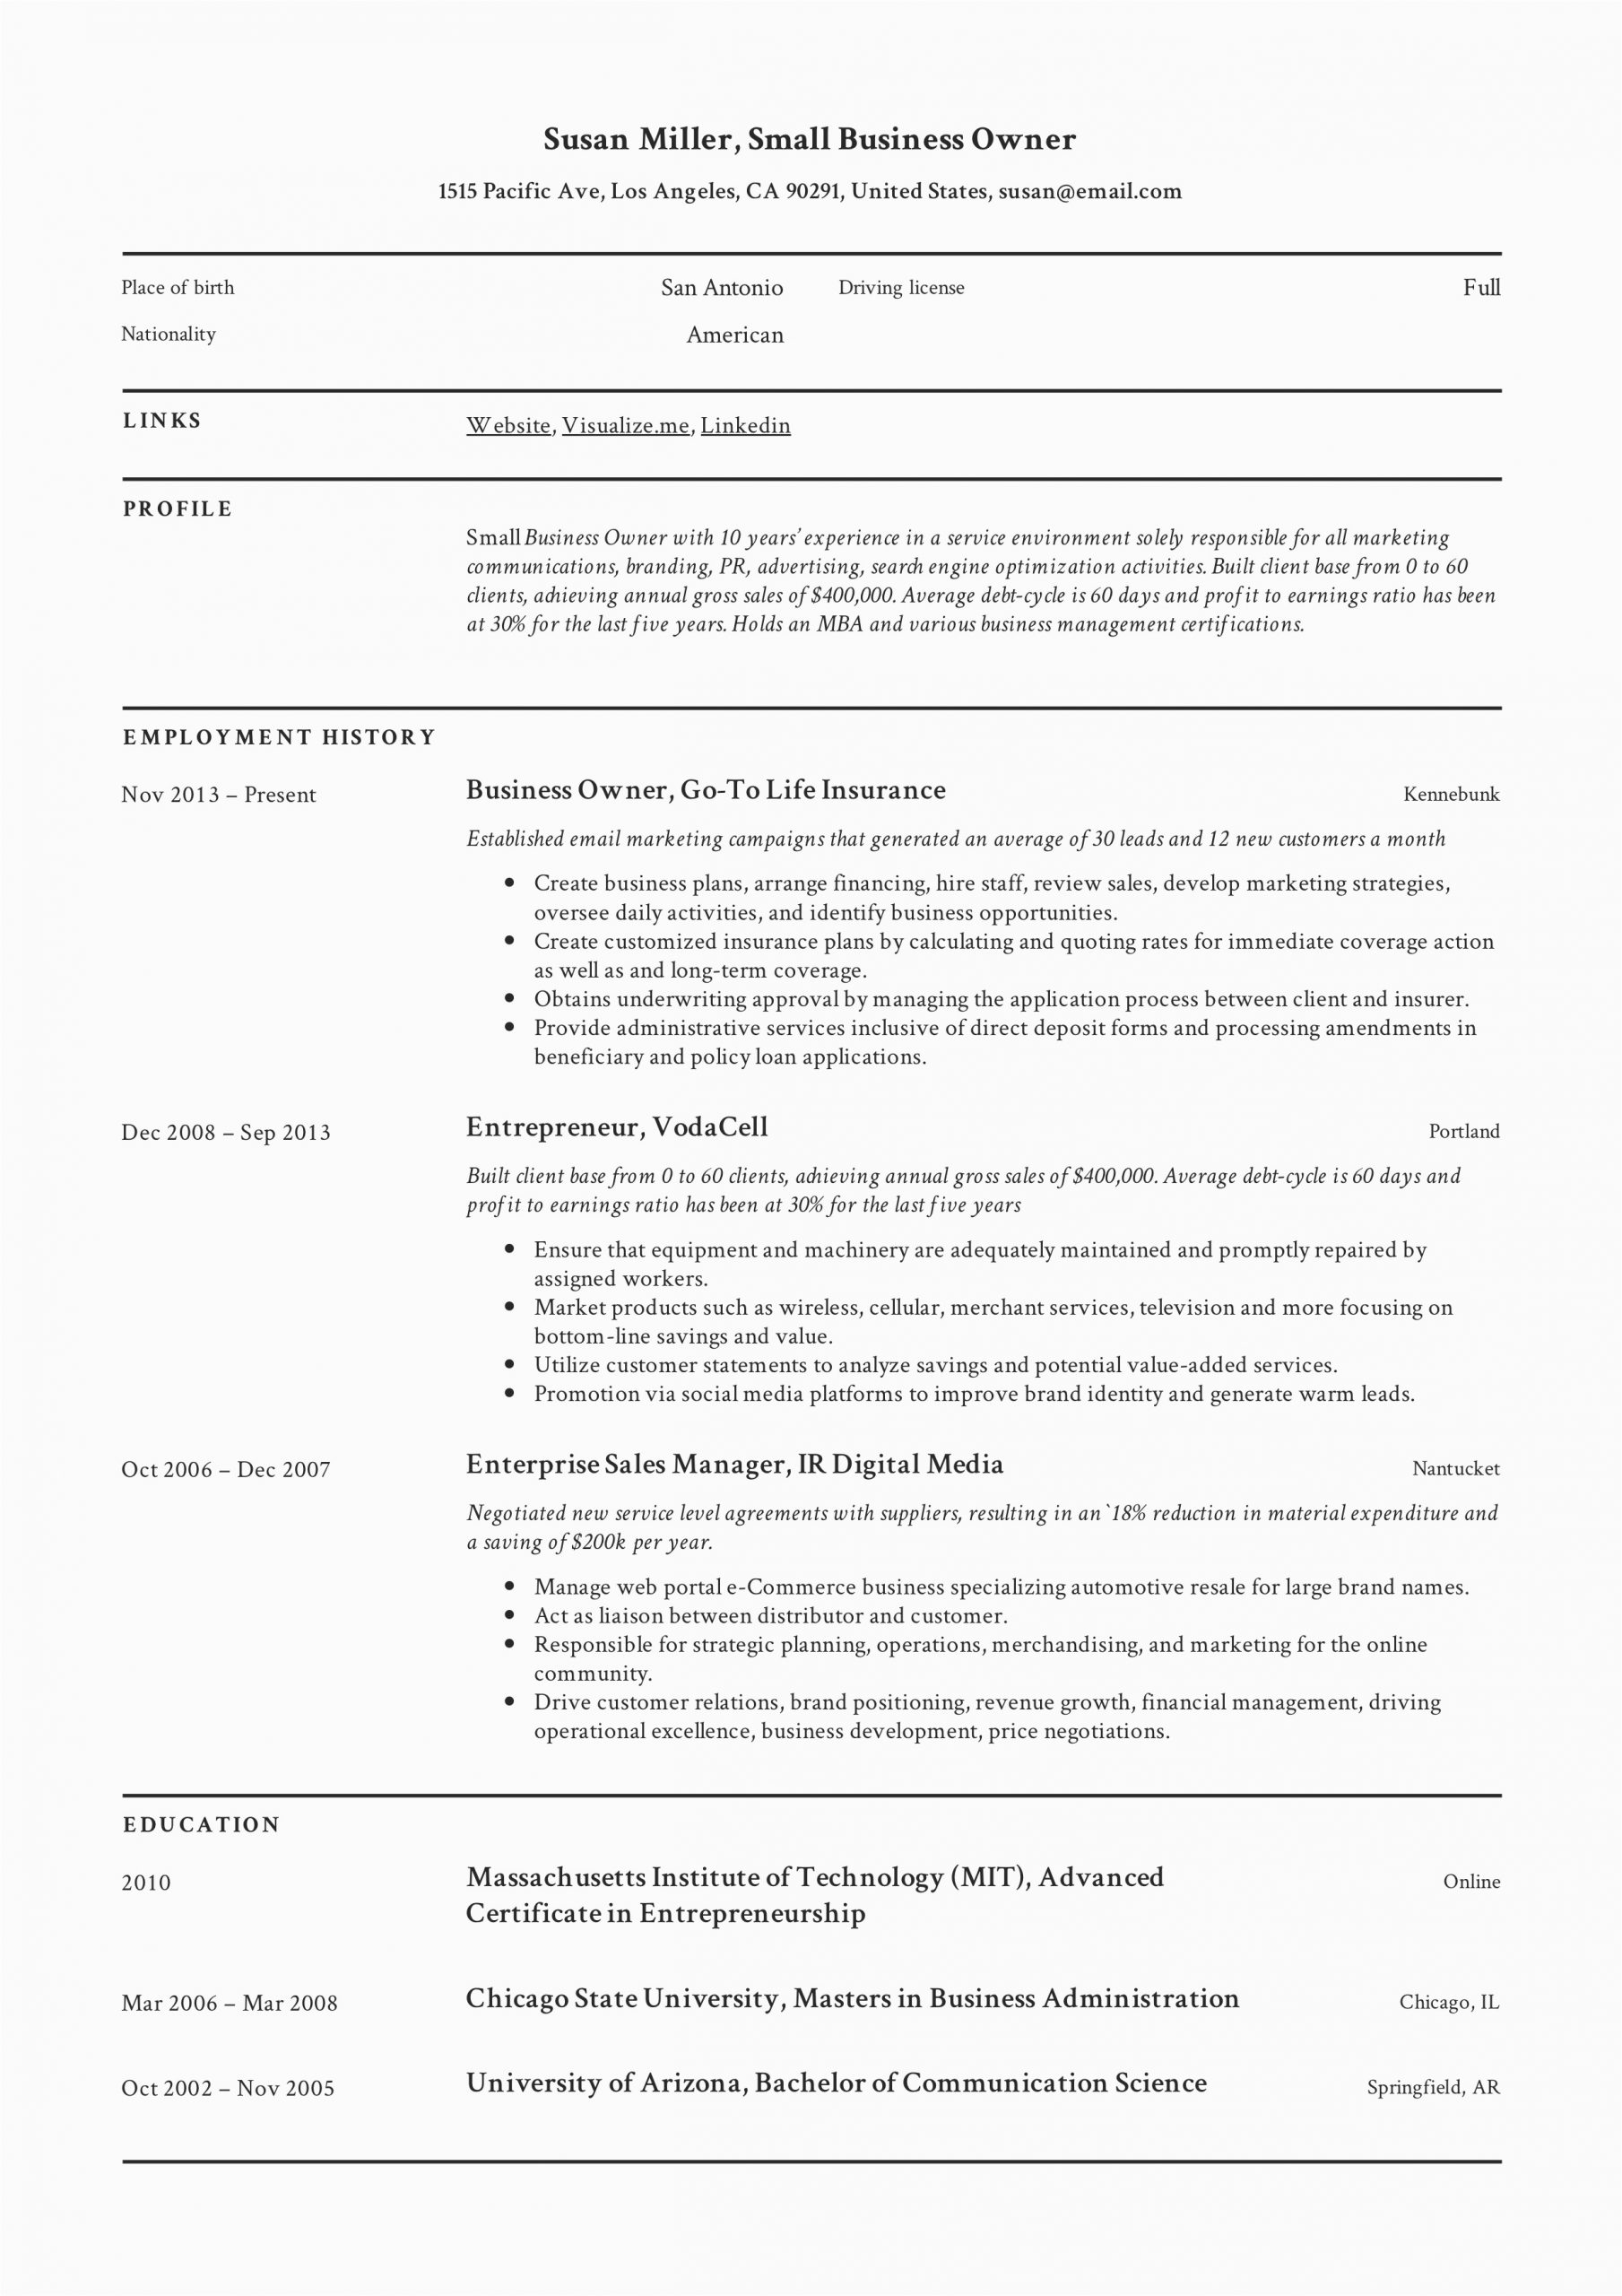 Sample Resume for Self Employed Business Owner Small Business Owner Resume Guide 12 Examples Pdf